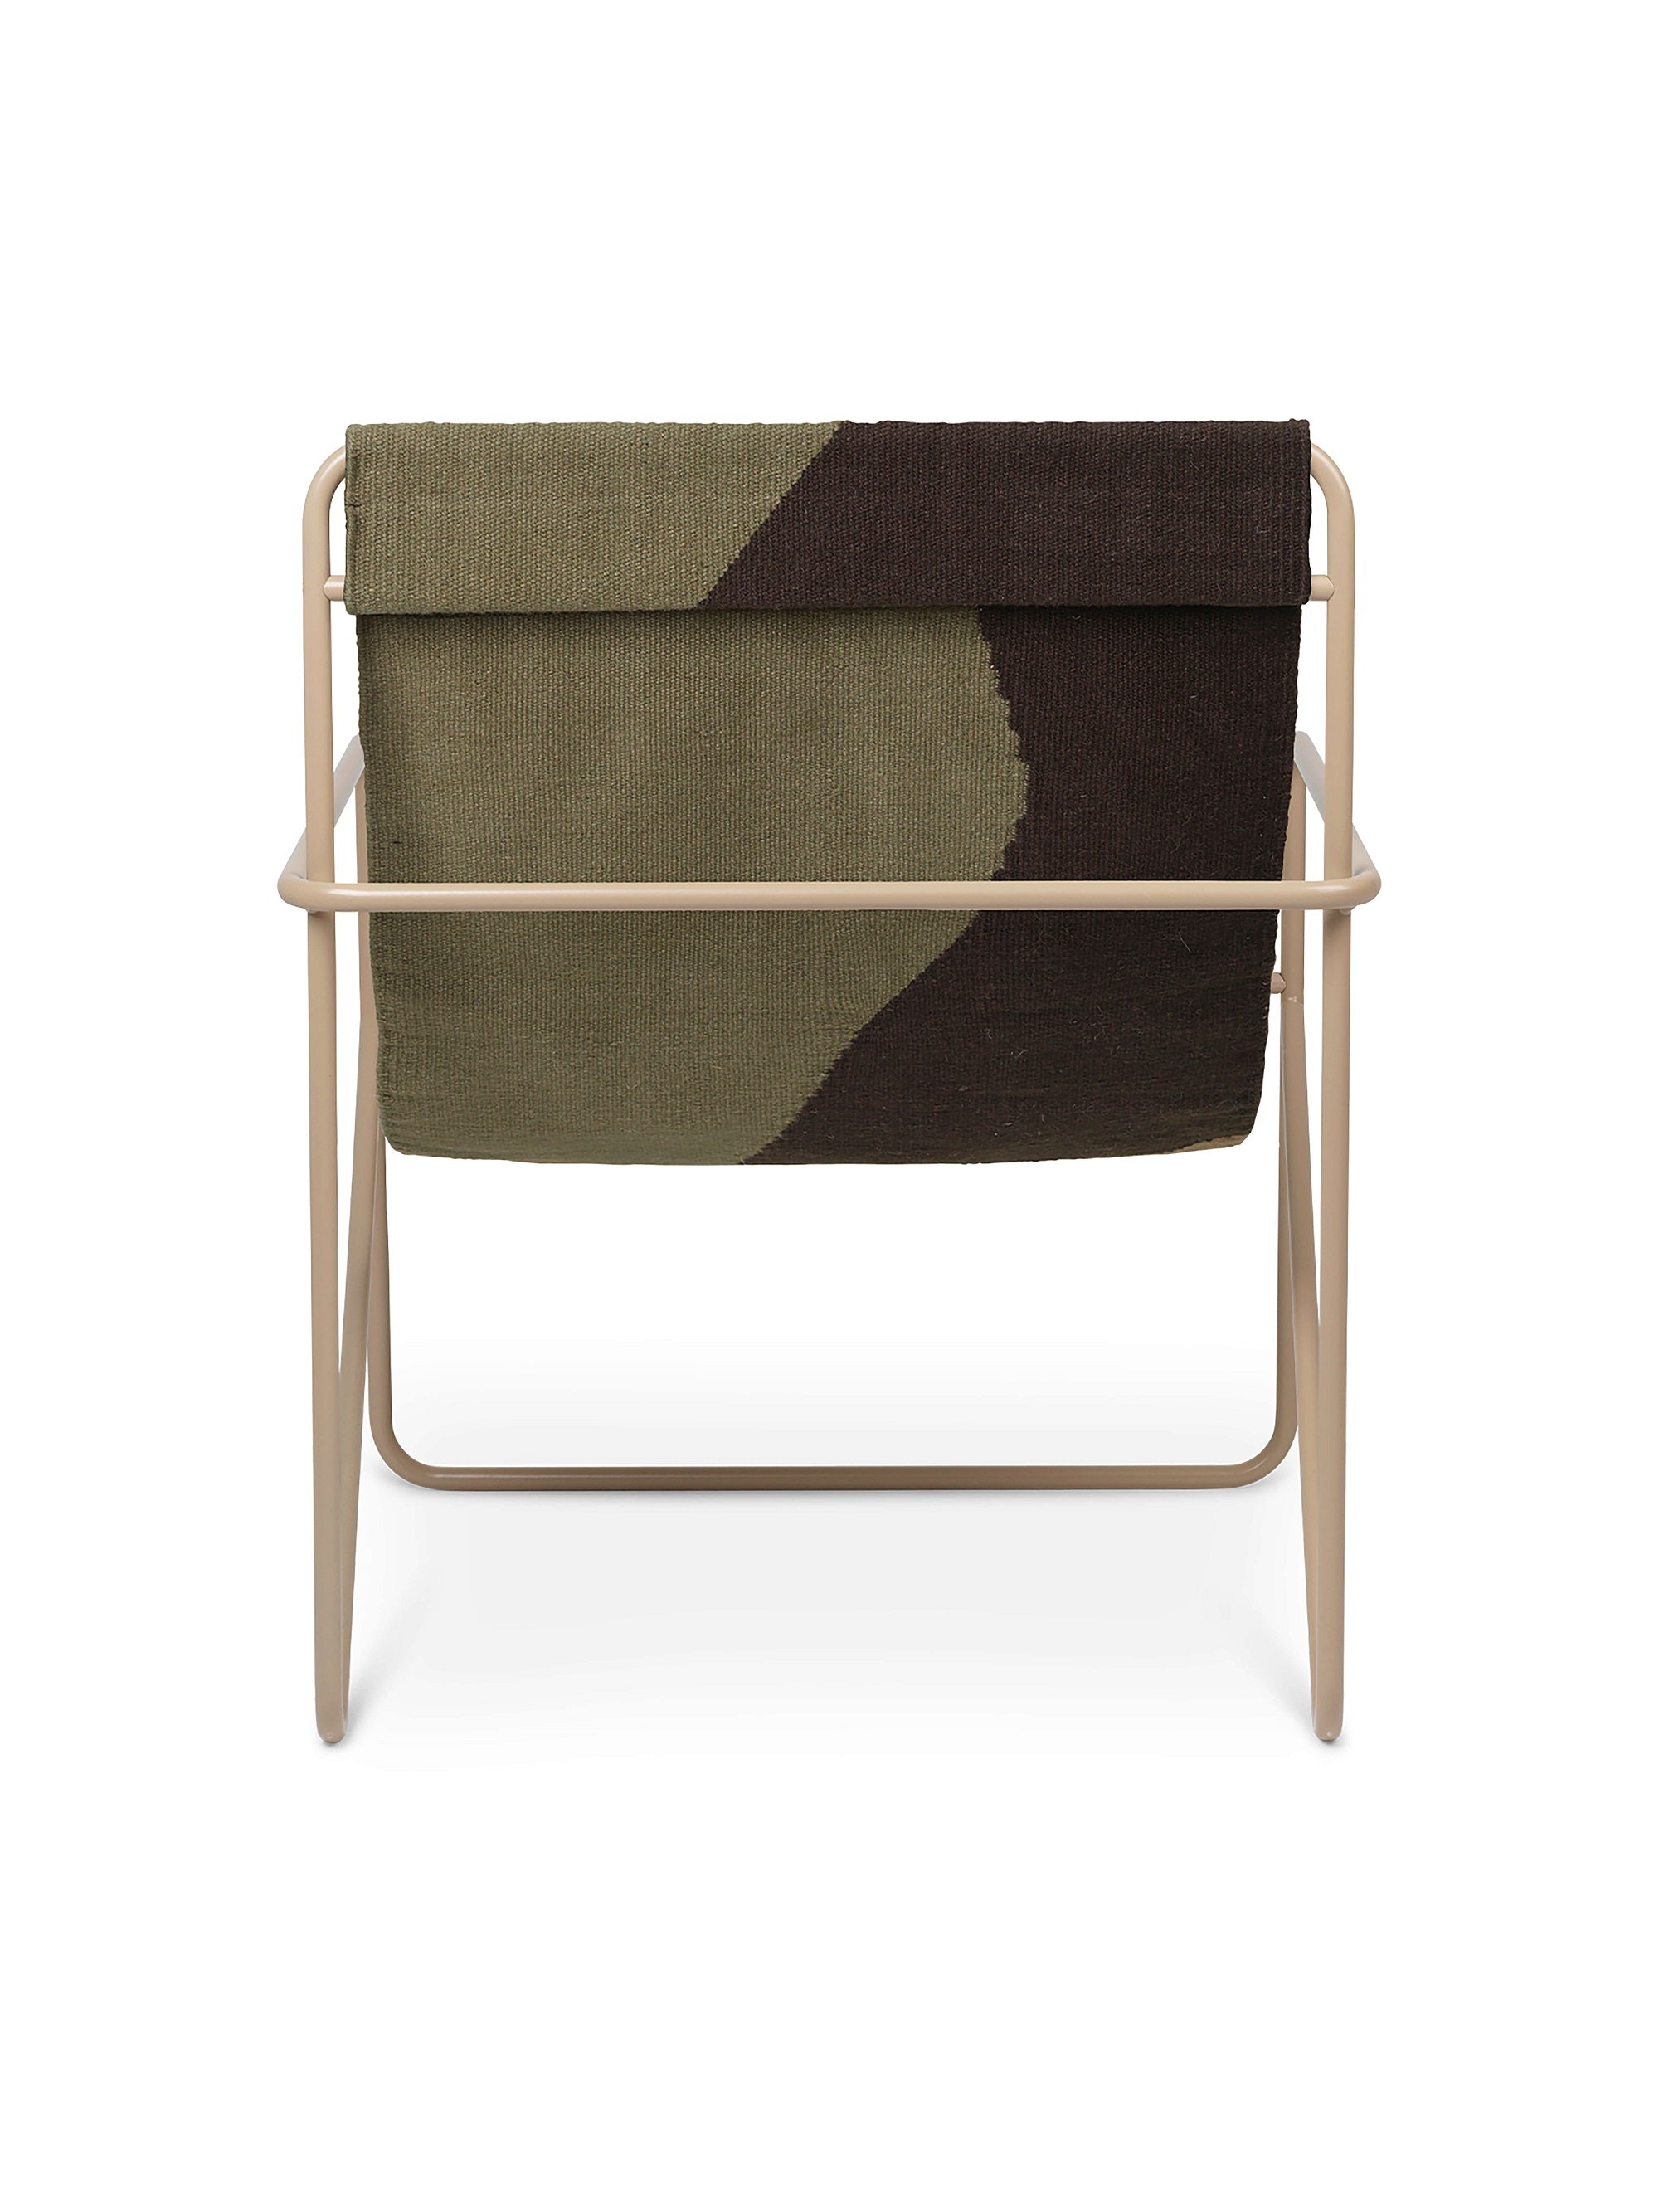 Desert Lounge Chair | Cashmere Frame + Dune Fabric | by ferm Living - Lifestory - ferm Living